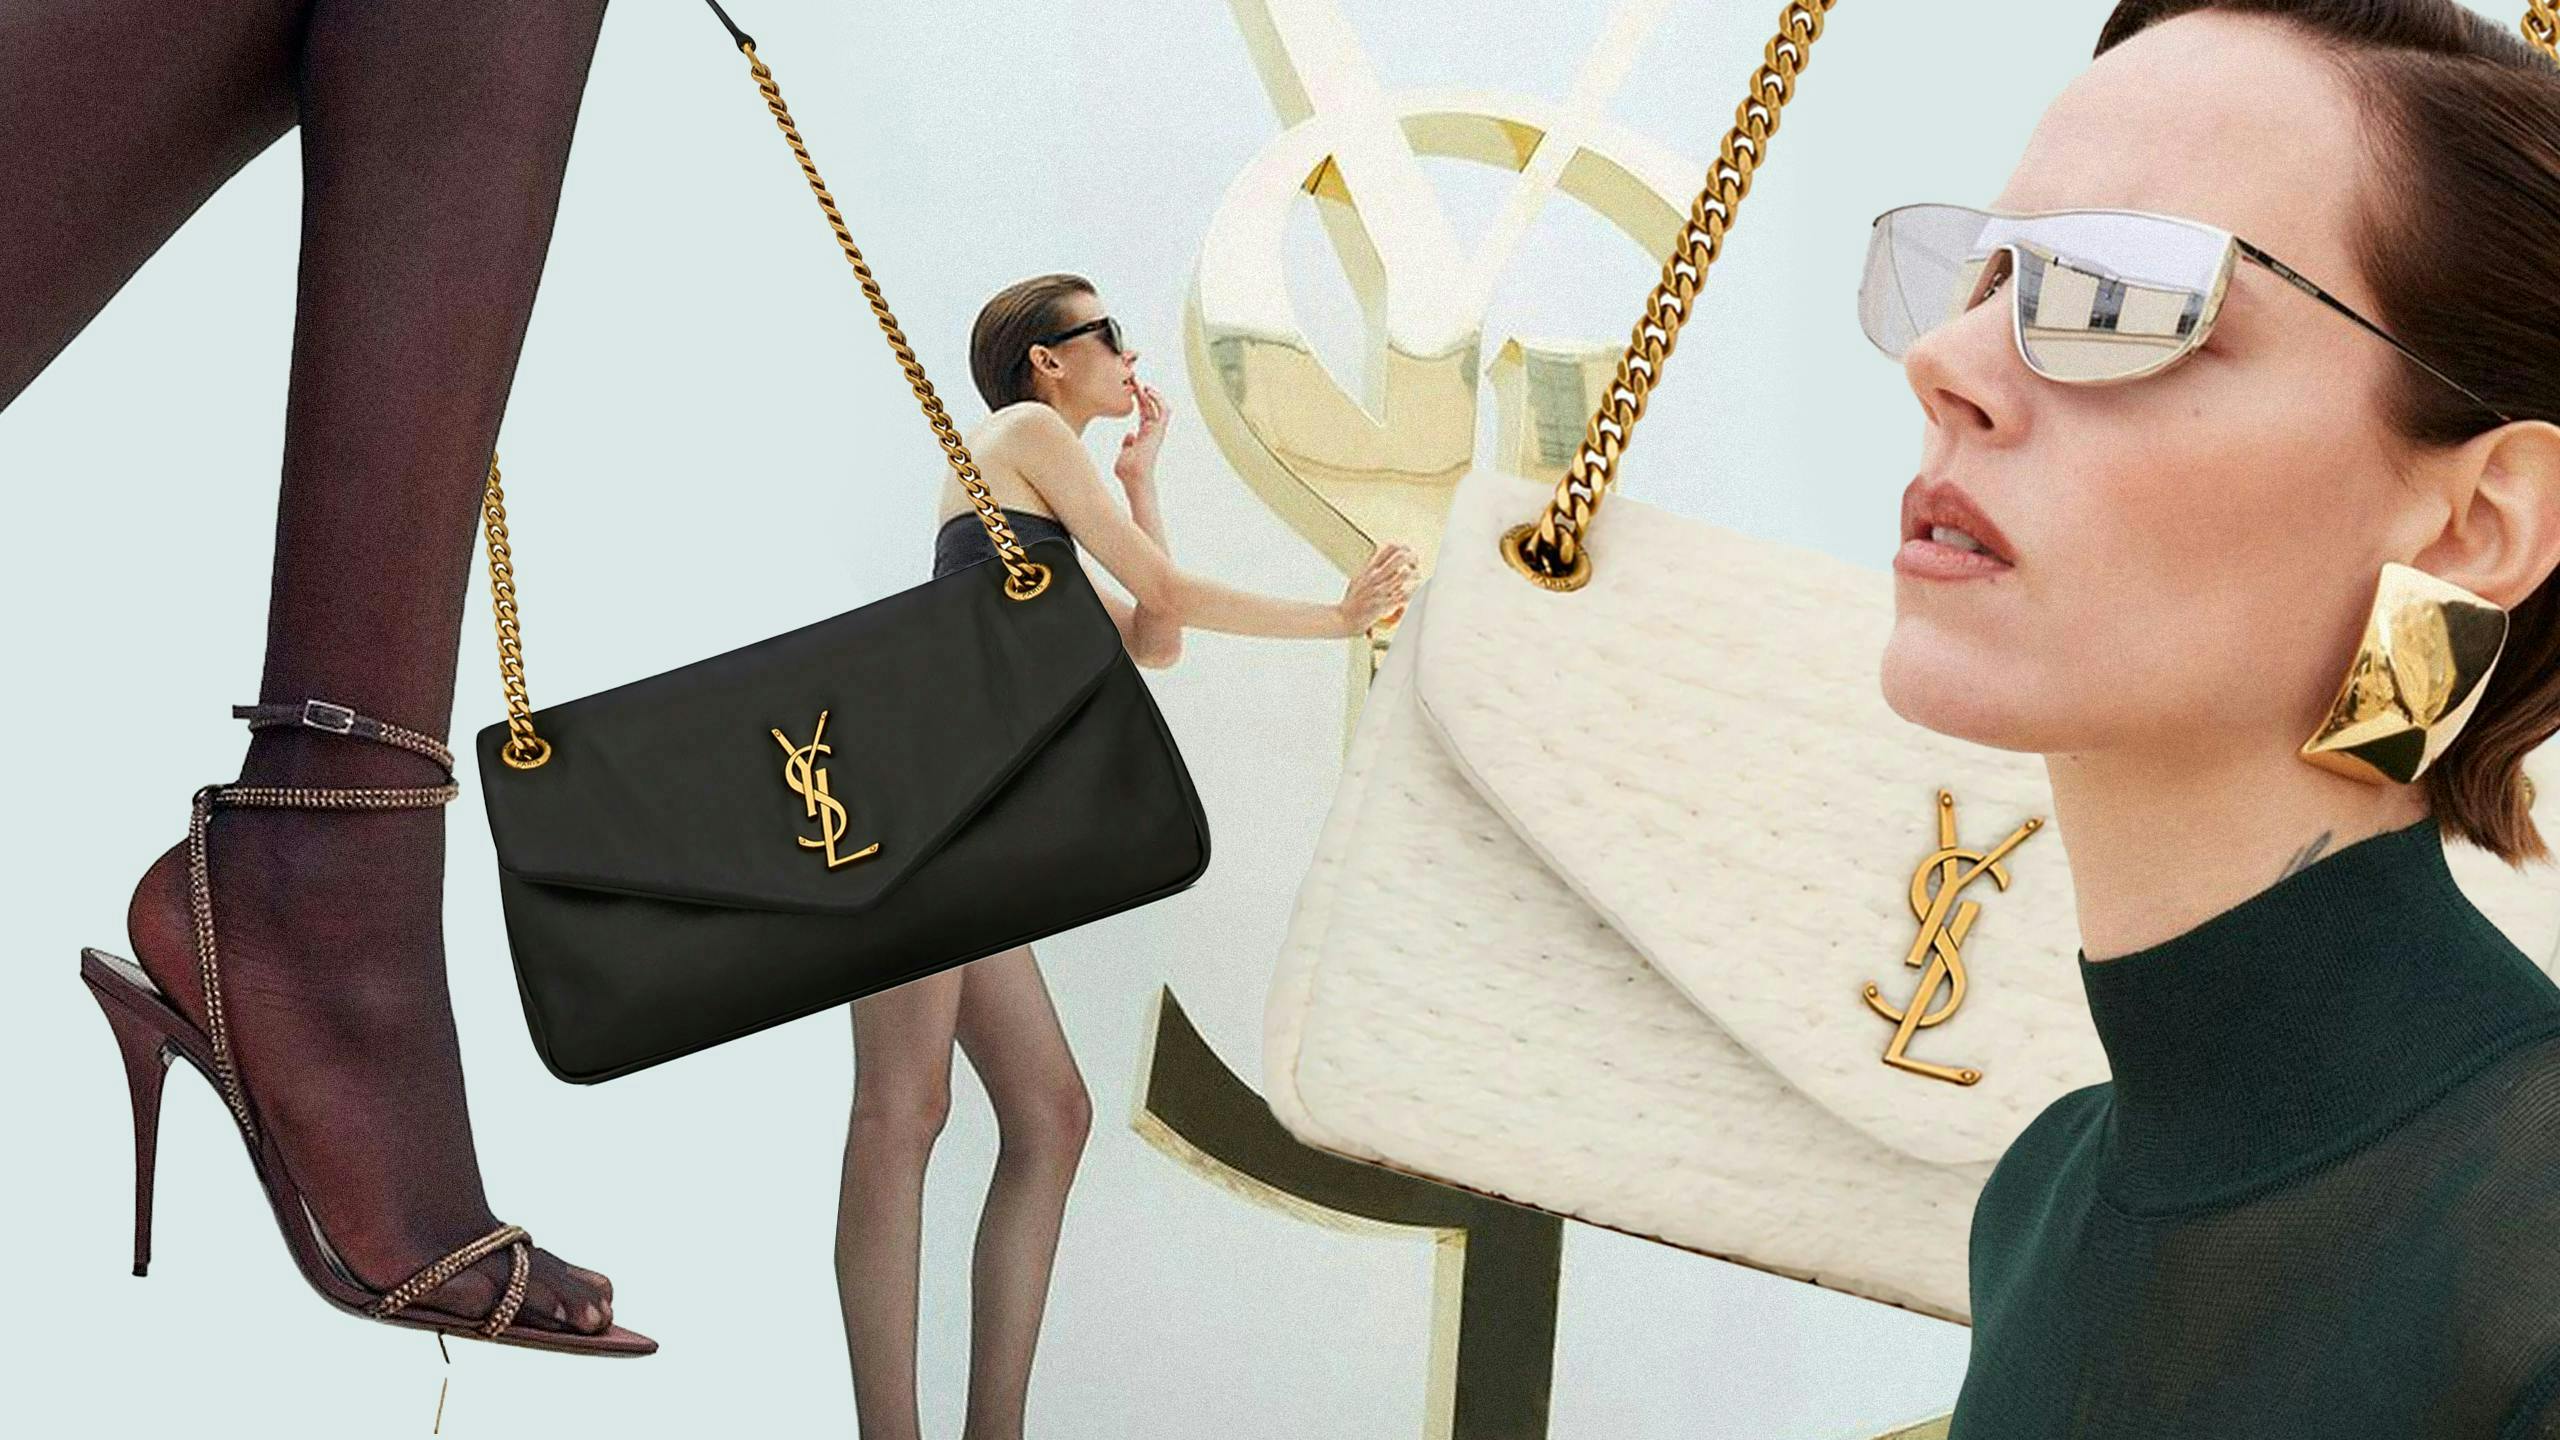 accessories bag handbag shoe purse high heel sunglasses adult person woman